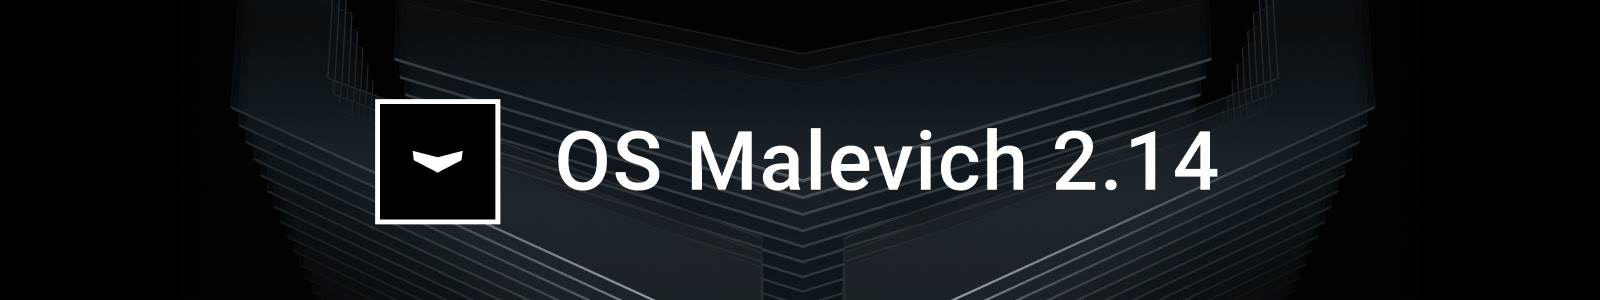 OS Malevich 2.14